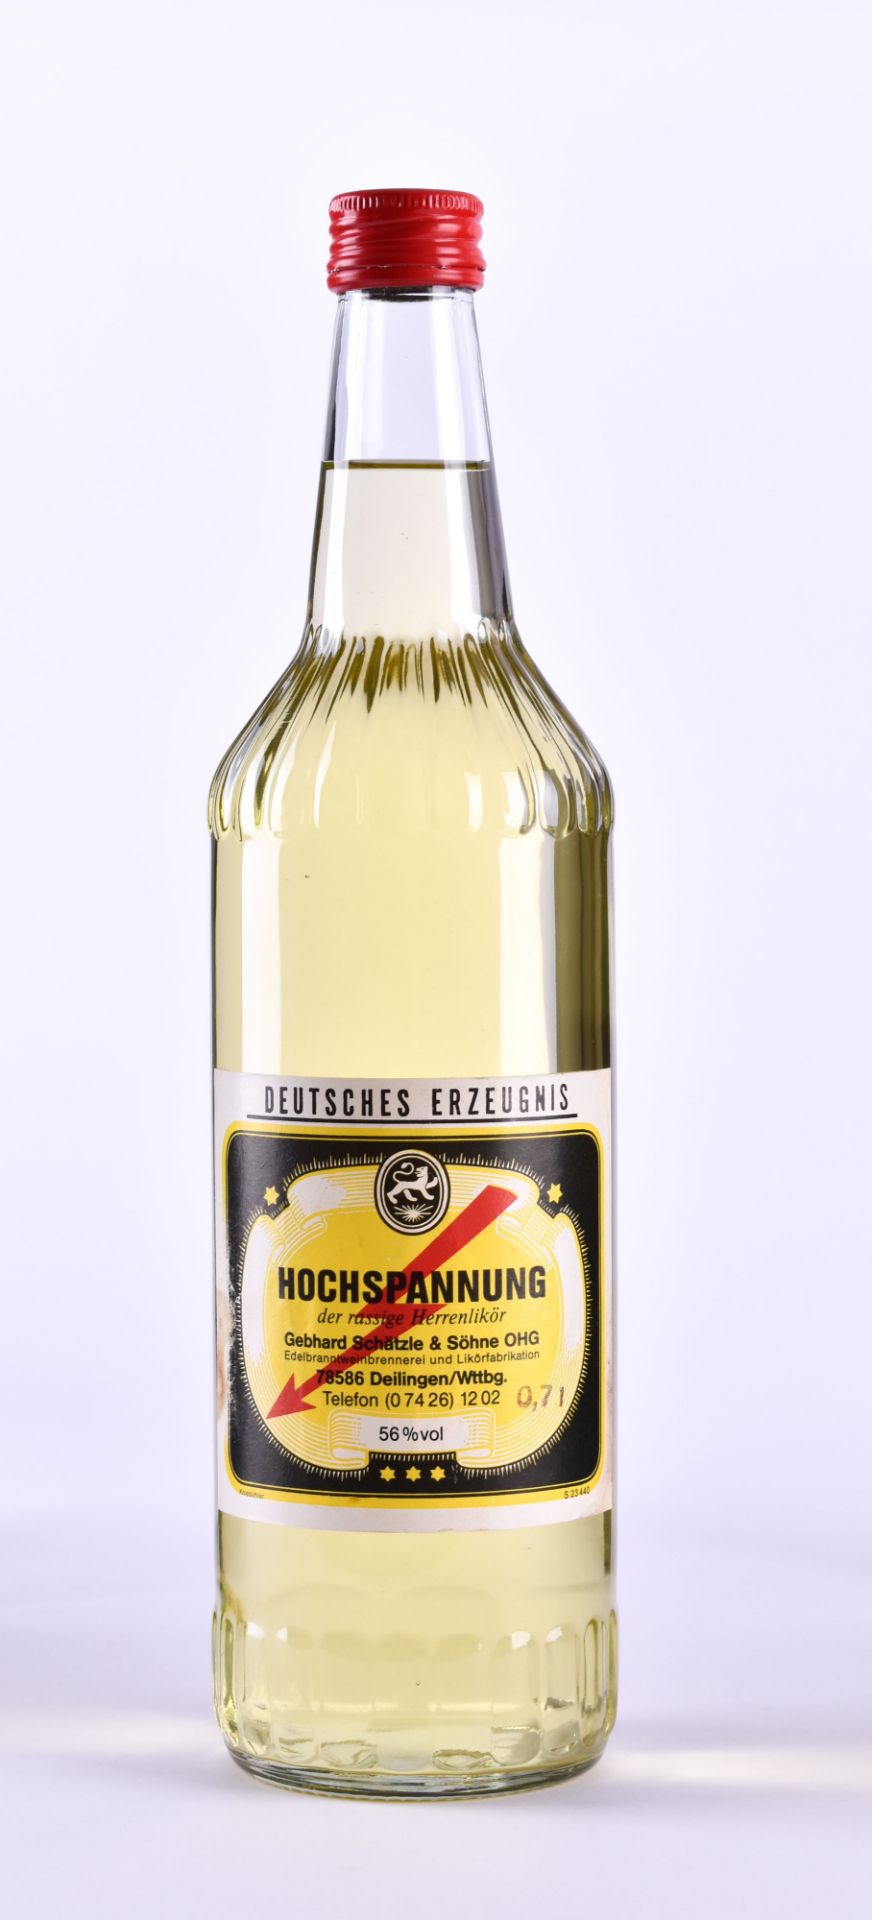 Hochspannung liqueur 1990fill level normal, label in good condition, 0.7 litreHochspannung Likör